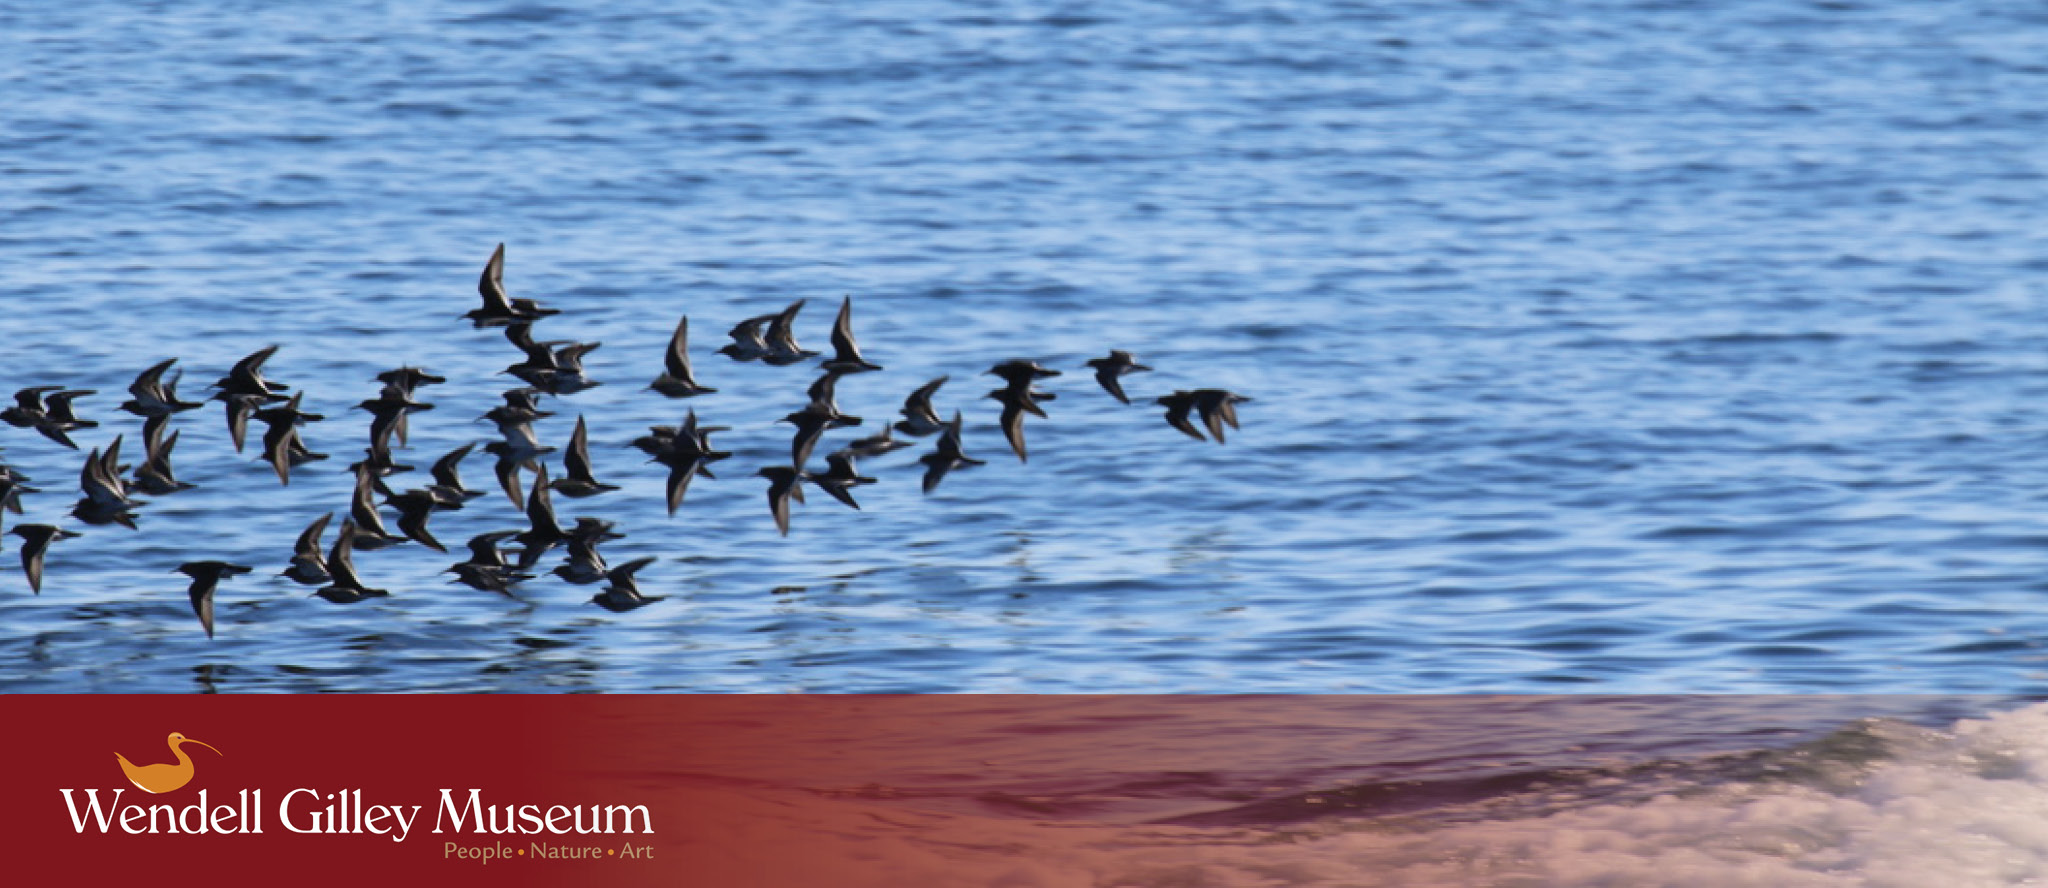 Purple sandpiper flock in flight over the blue sea.